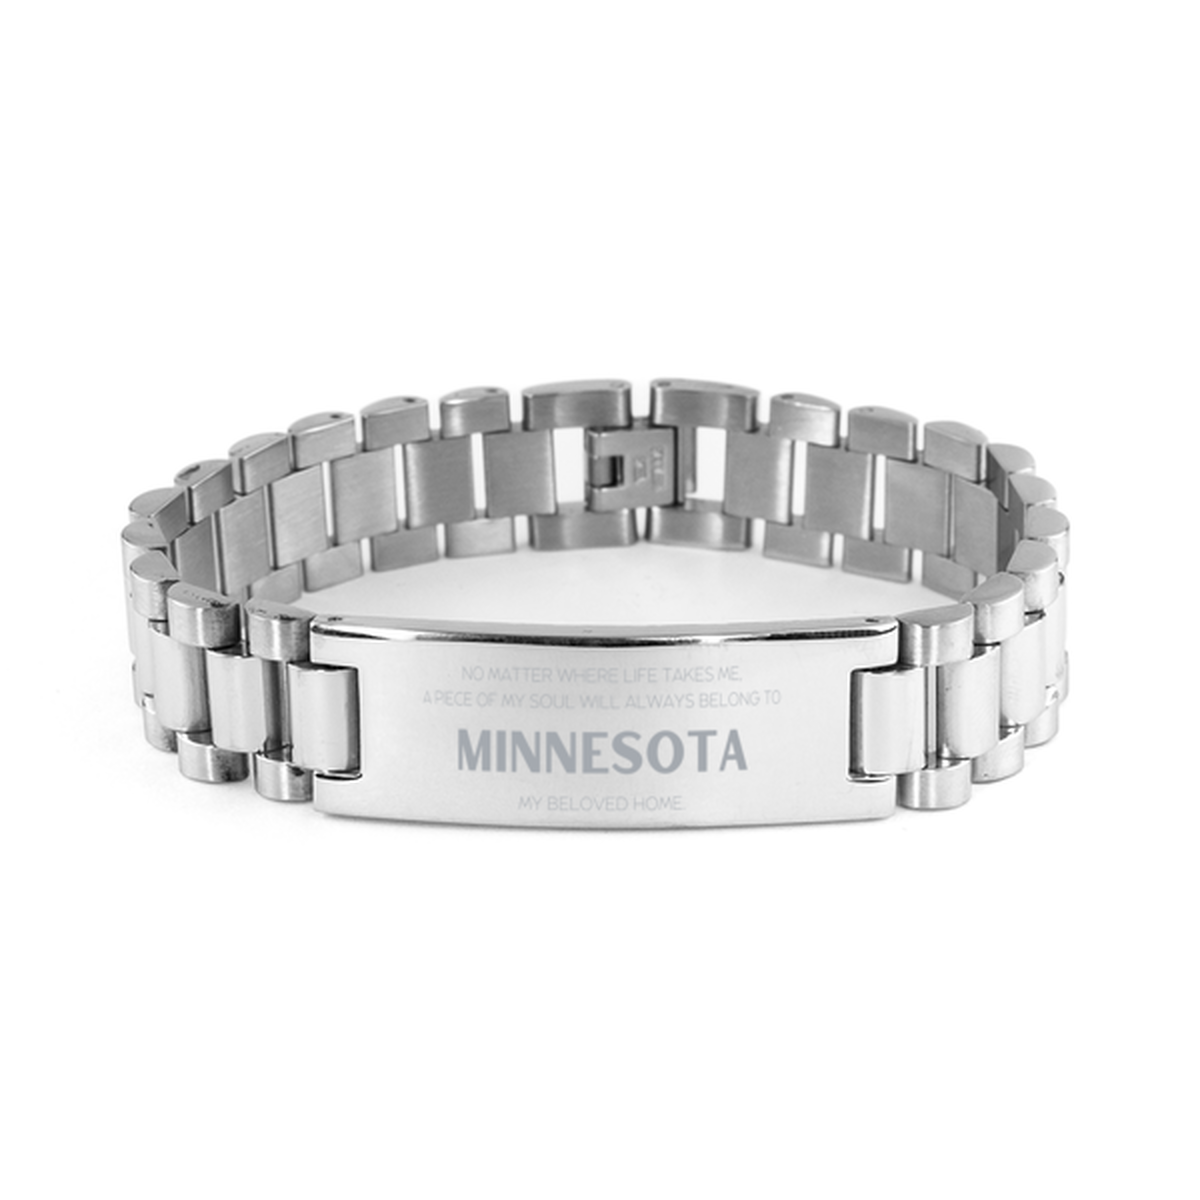 Love Minnesota State Gifts, My soul will always belong to Minnesota, Proud Ladder Stainless Steel Bracelet, Birthday Unique Gifts For Minnesota Men, Women, Friends